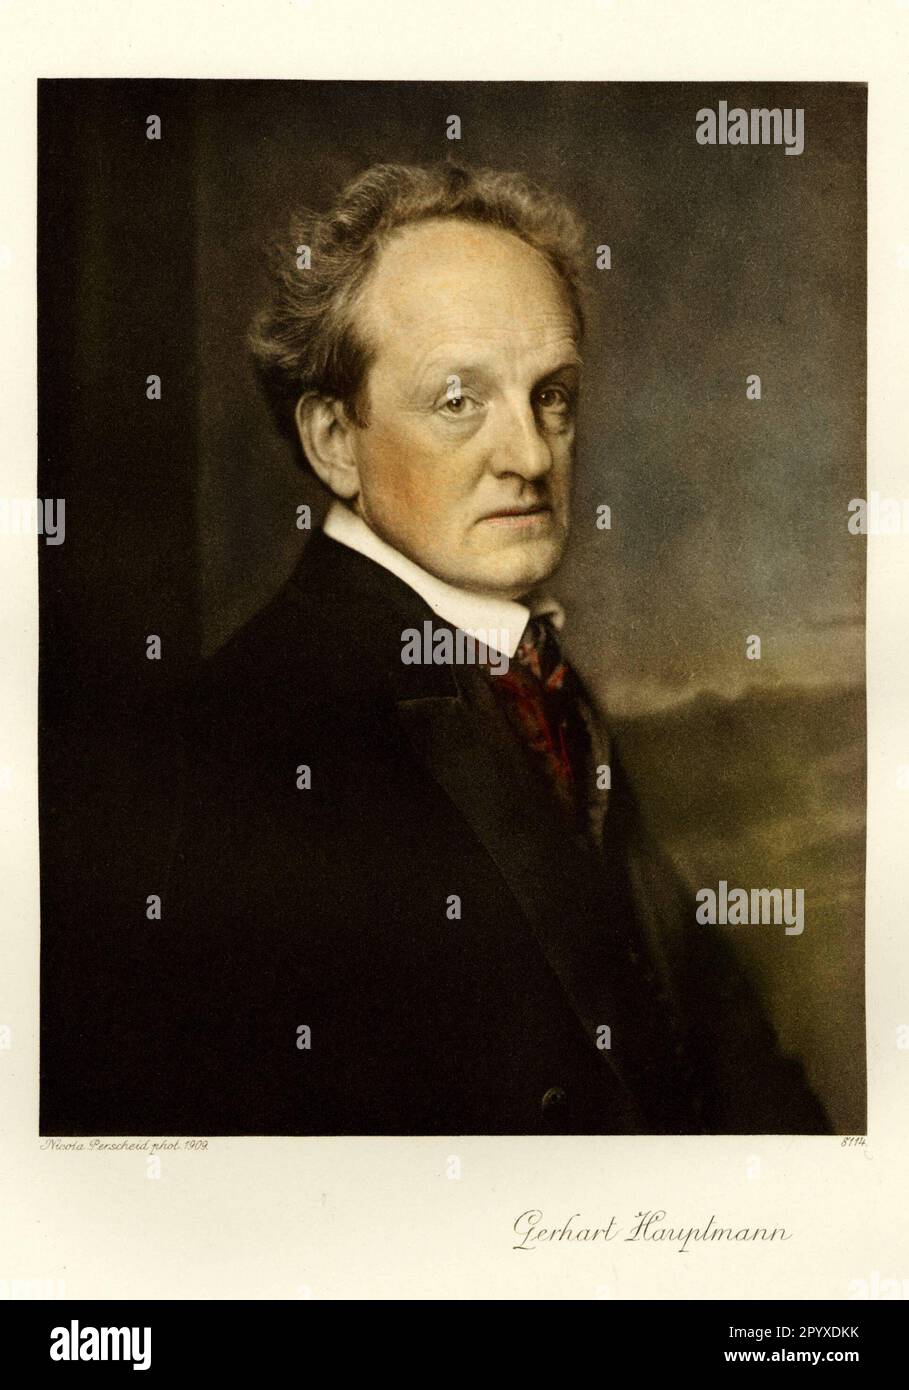 Gerhart Hauptmann (1862-1946), German writer. Photograph by Nicola Perscheid from 1909. Photo: Heliogravure, Corpus Imaginum, Hanfstaengl Collection. [automated translation] Stock Photo